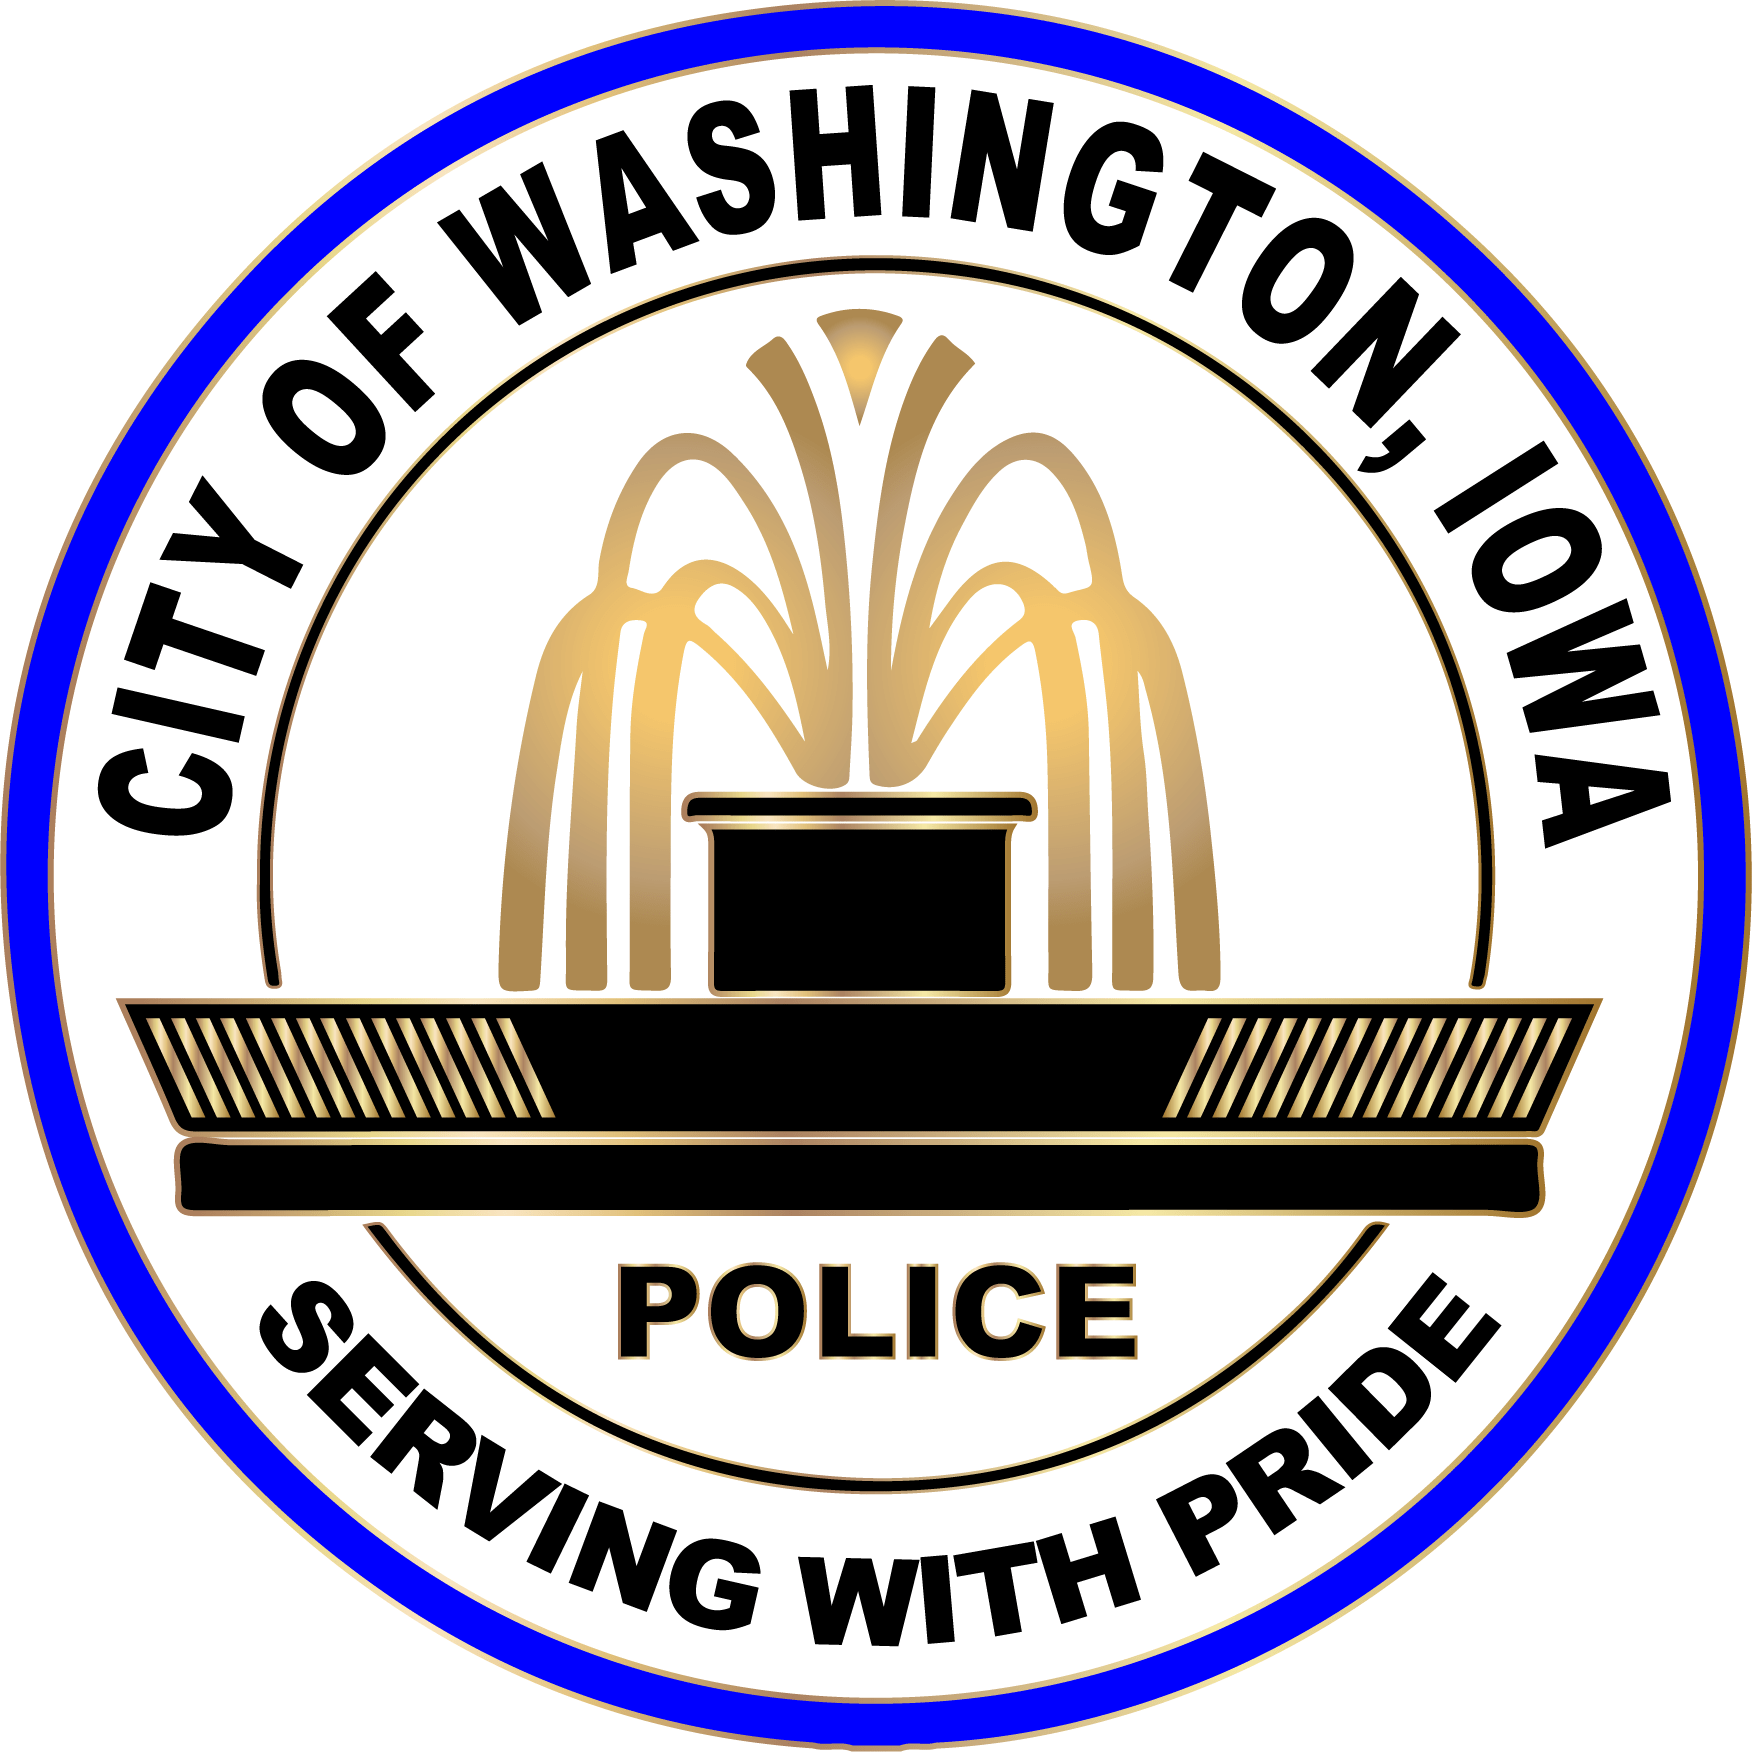 Washington police logo